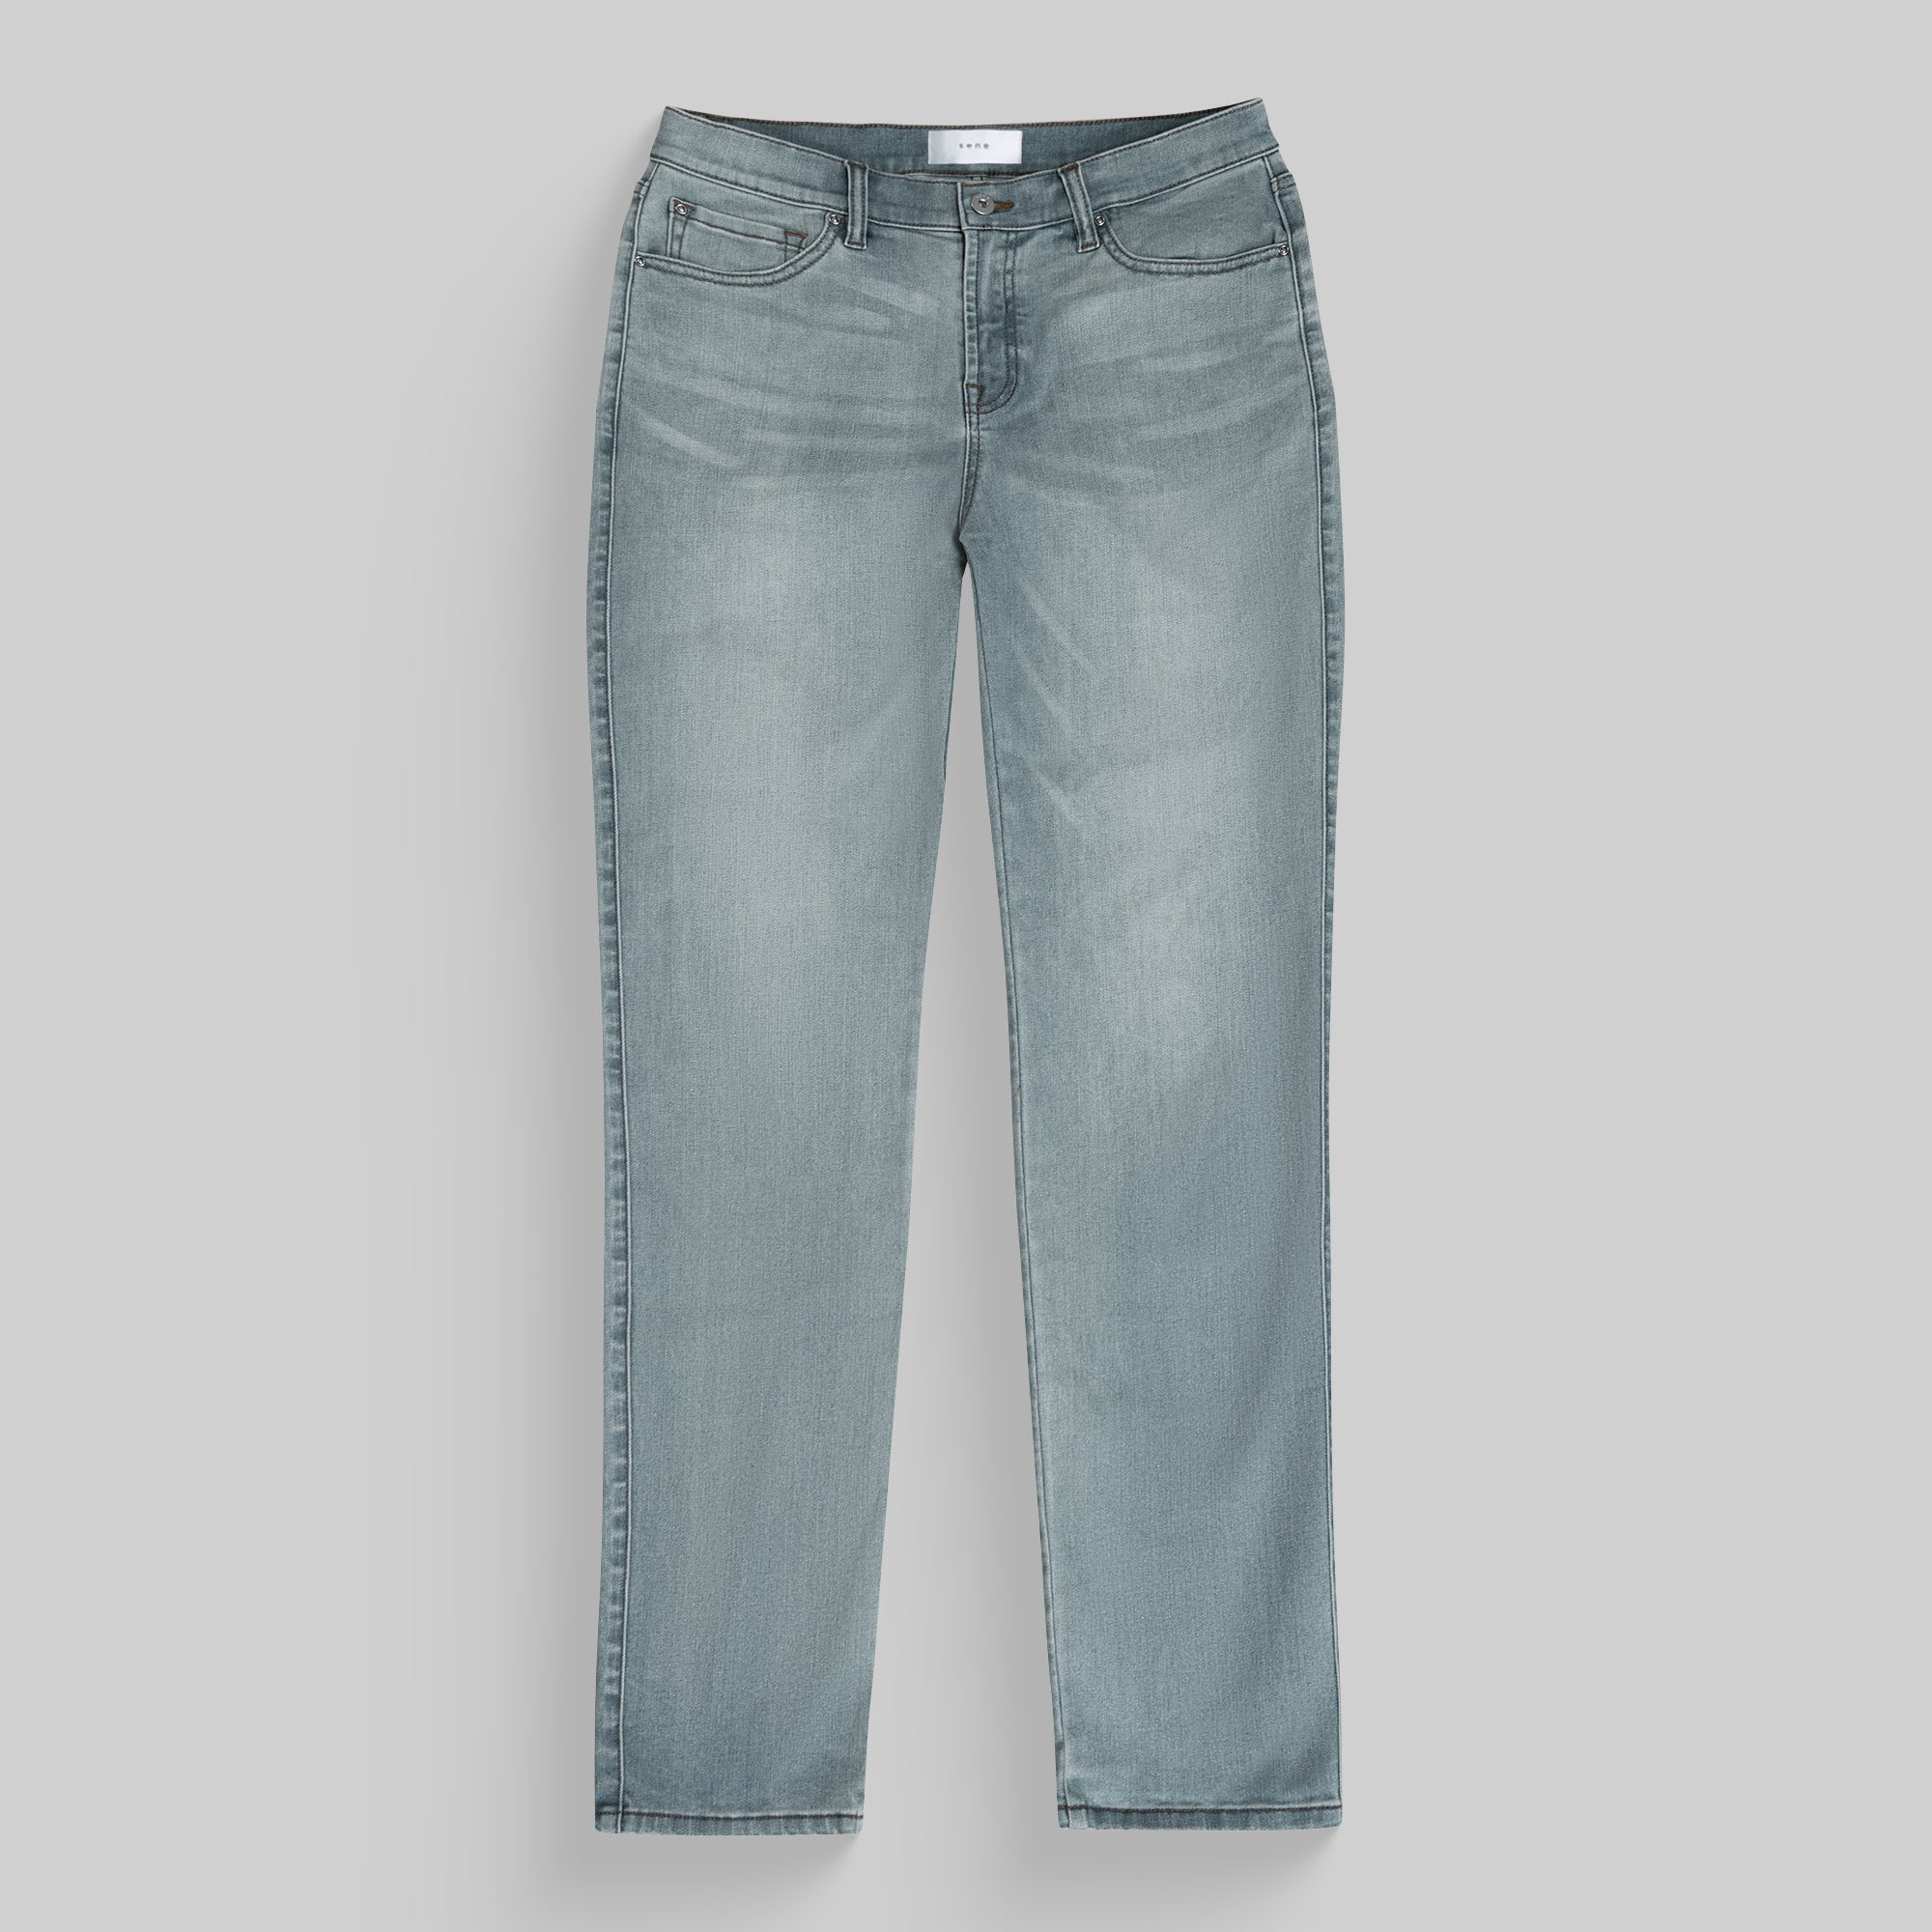 Sene - Sizeless Custom Clothing (Custom Jeans, Custom Suits)